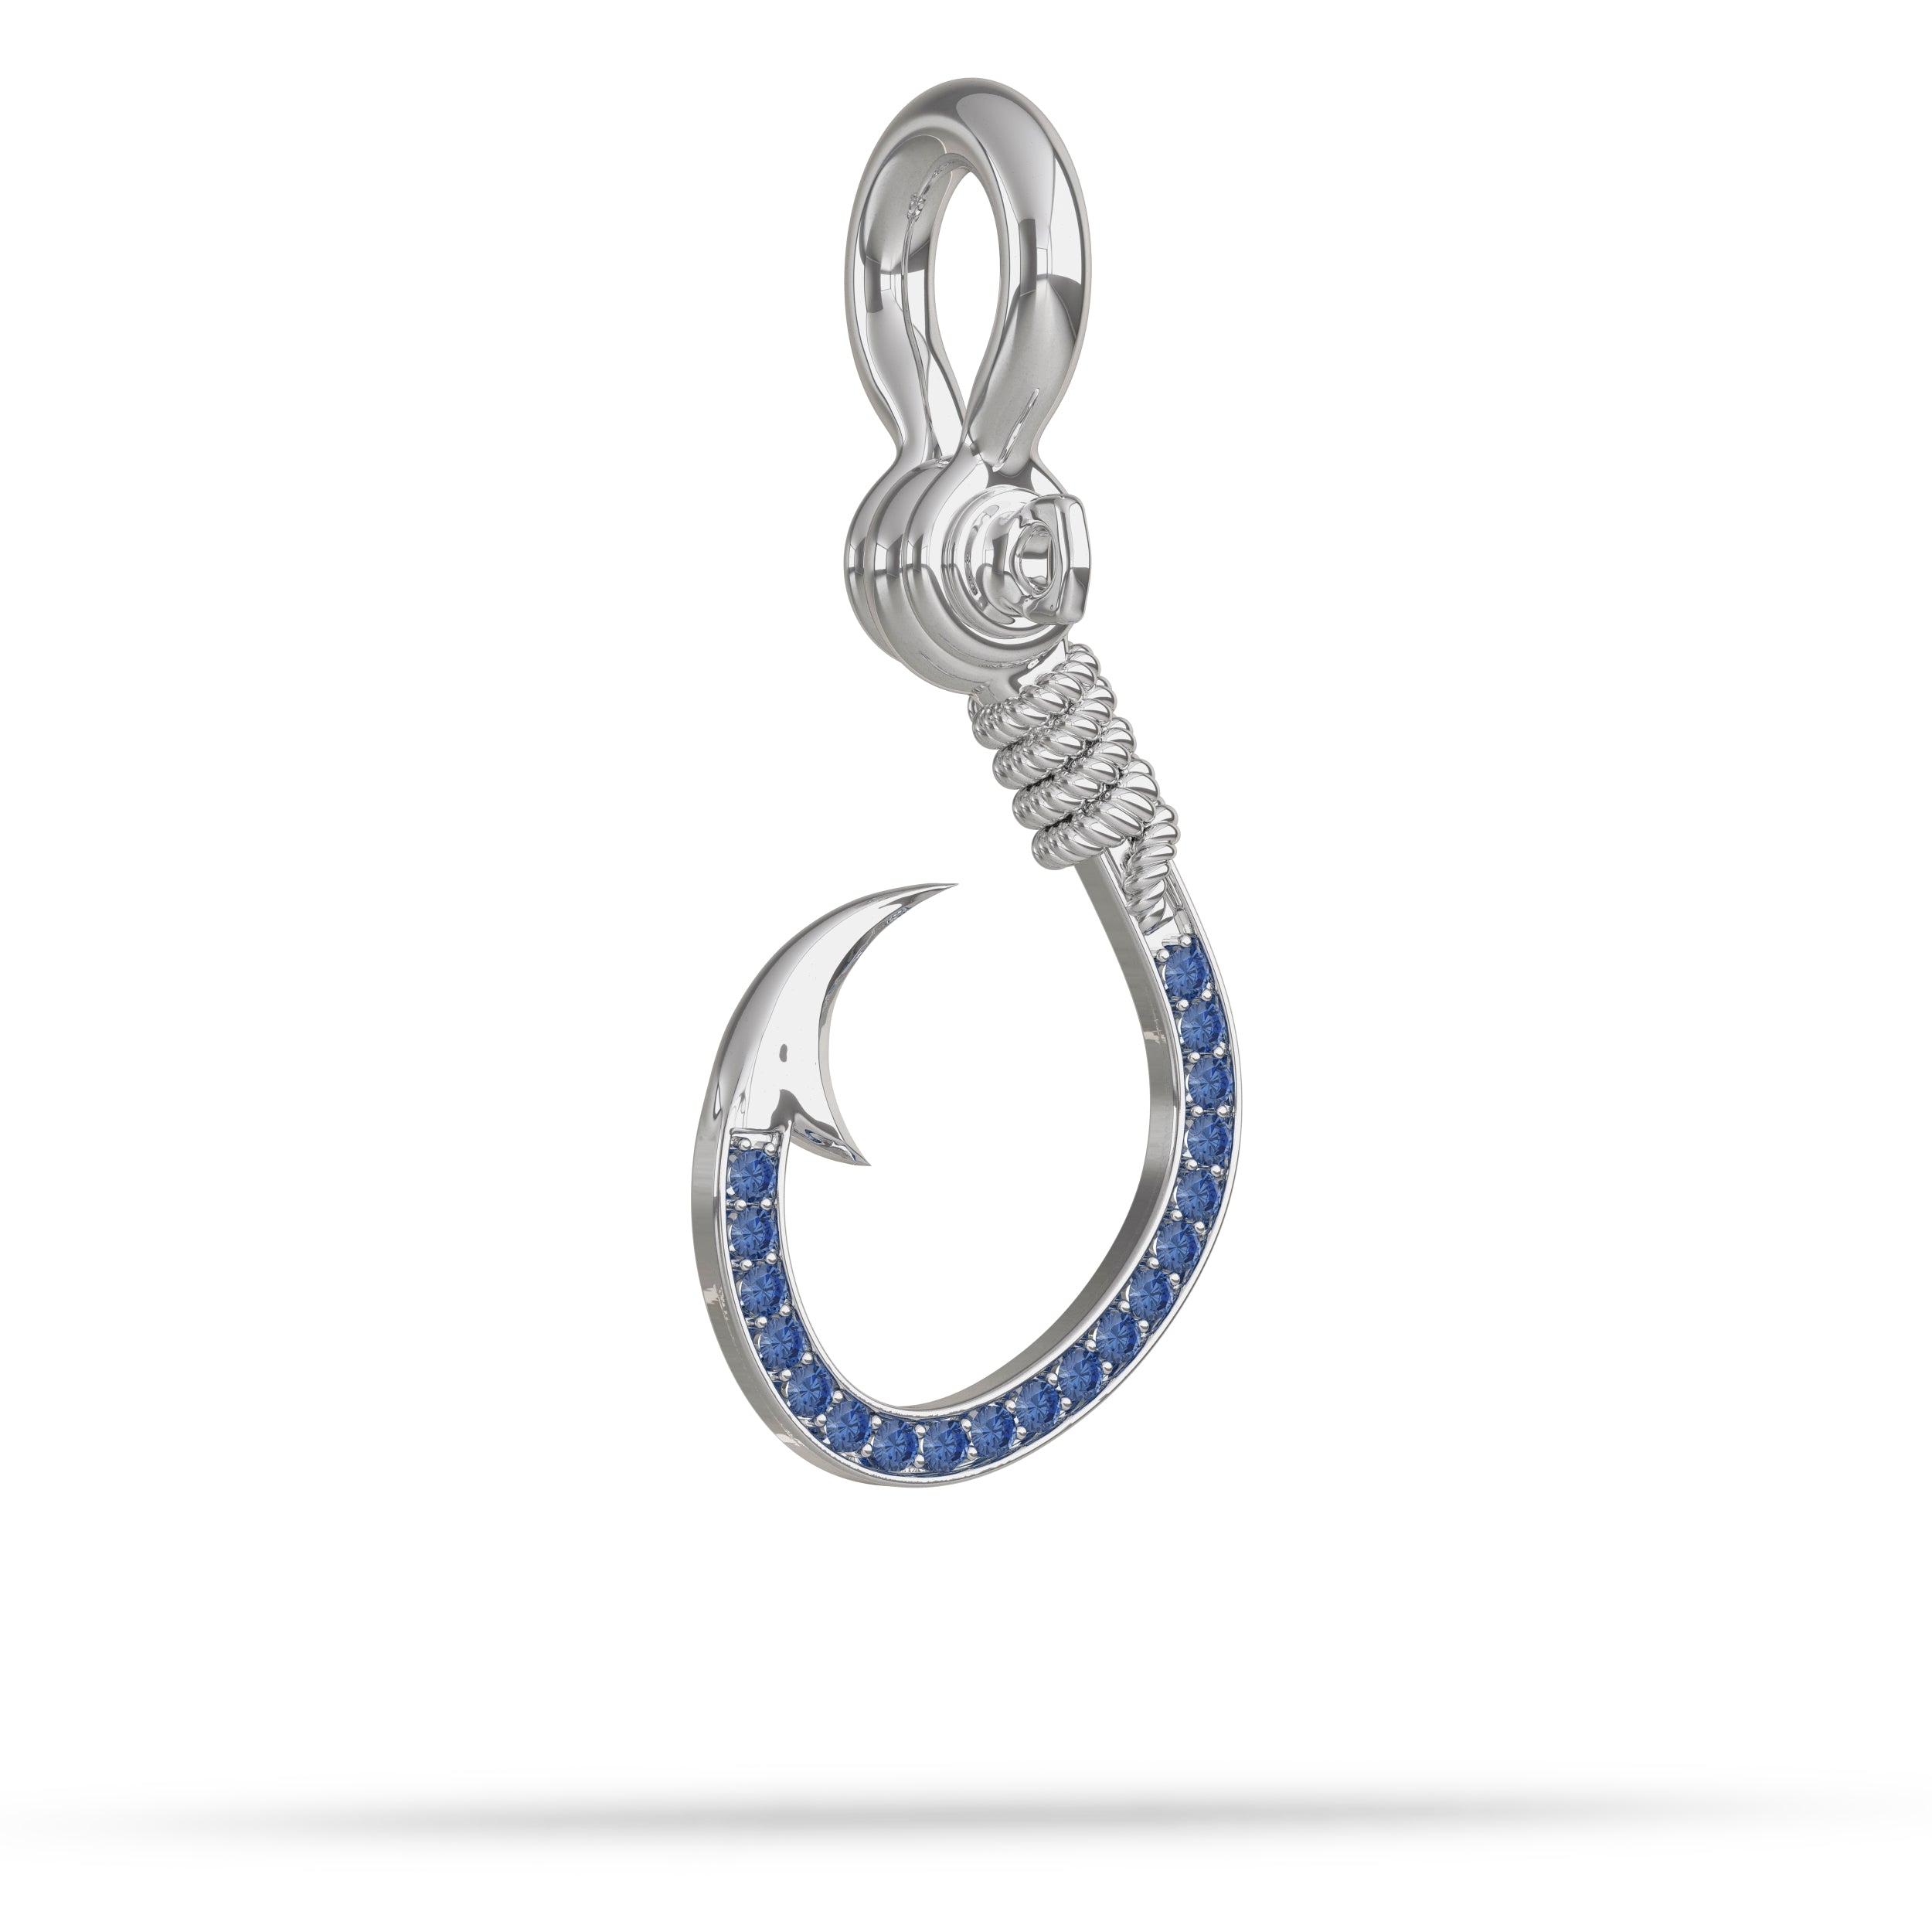 Stoned Fishing Hook Pendant I Nautical Treasure Jewelry 18K / 38mm (Medium 2mm Stones) / Sapphire by Nautical Treasure Jewelry